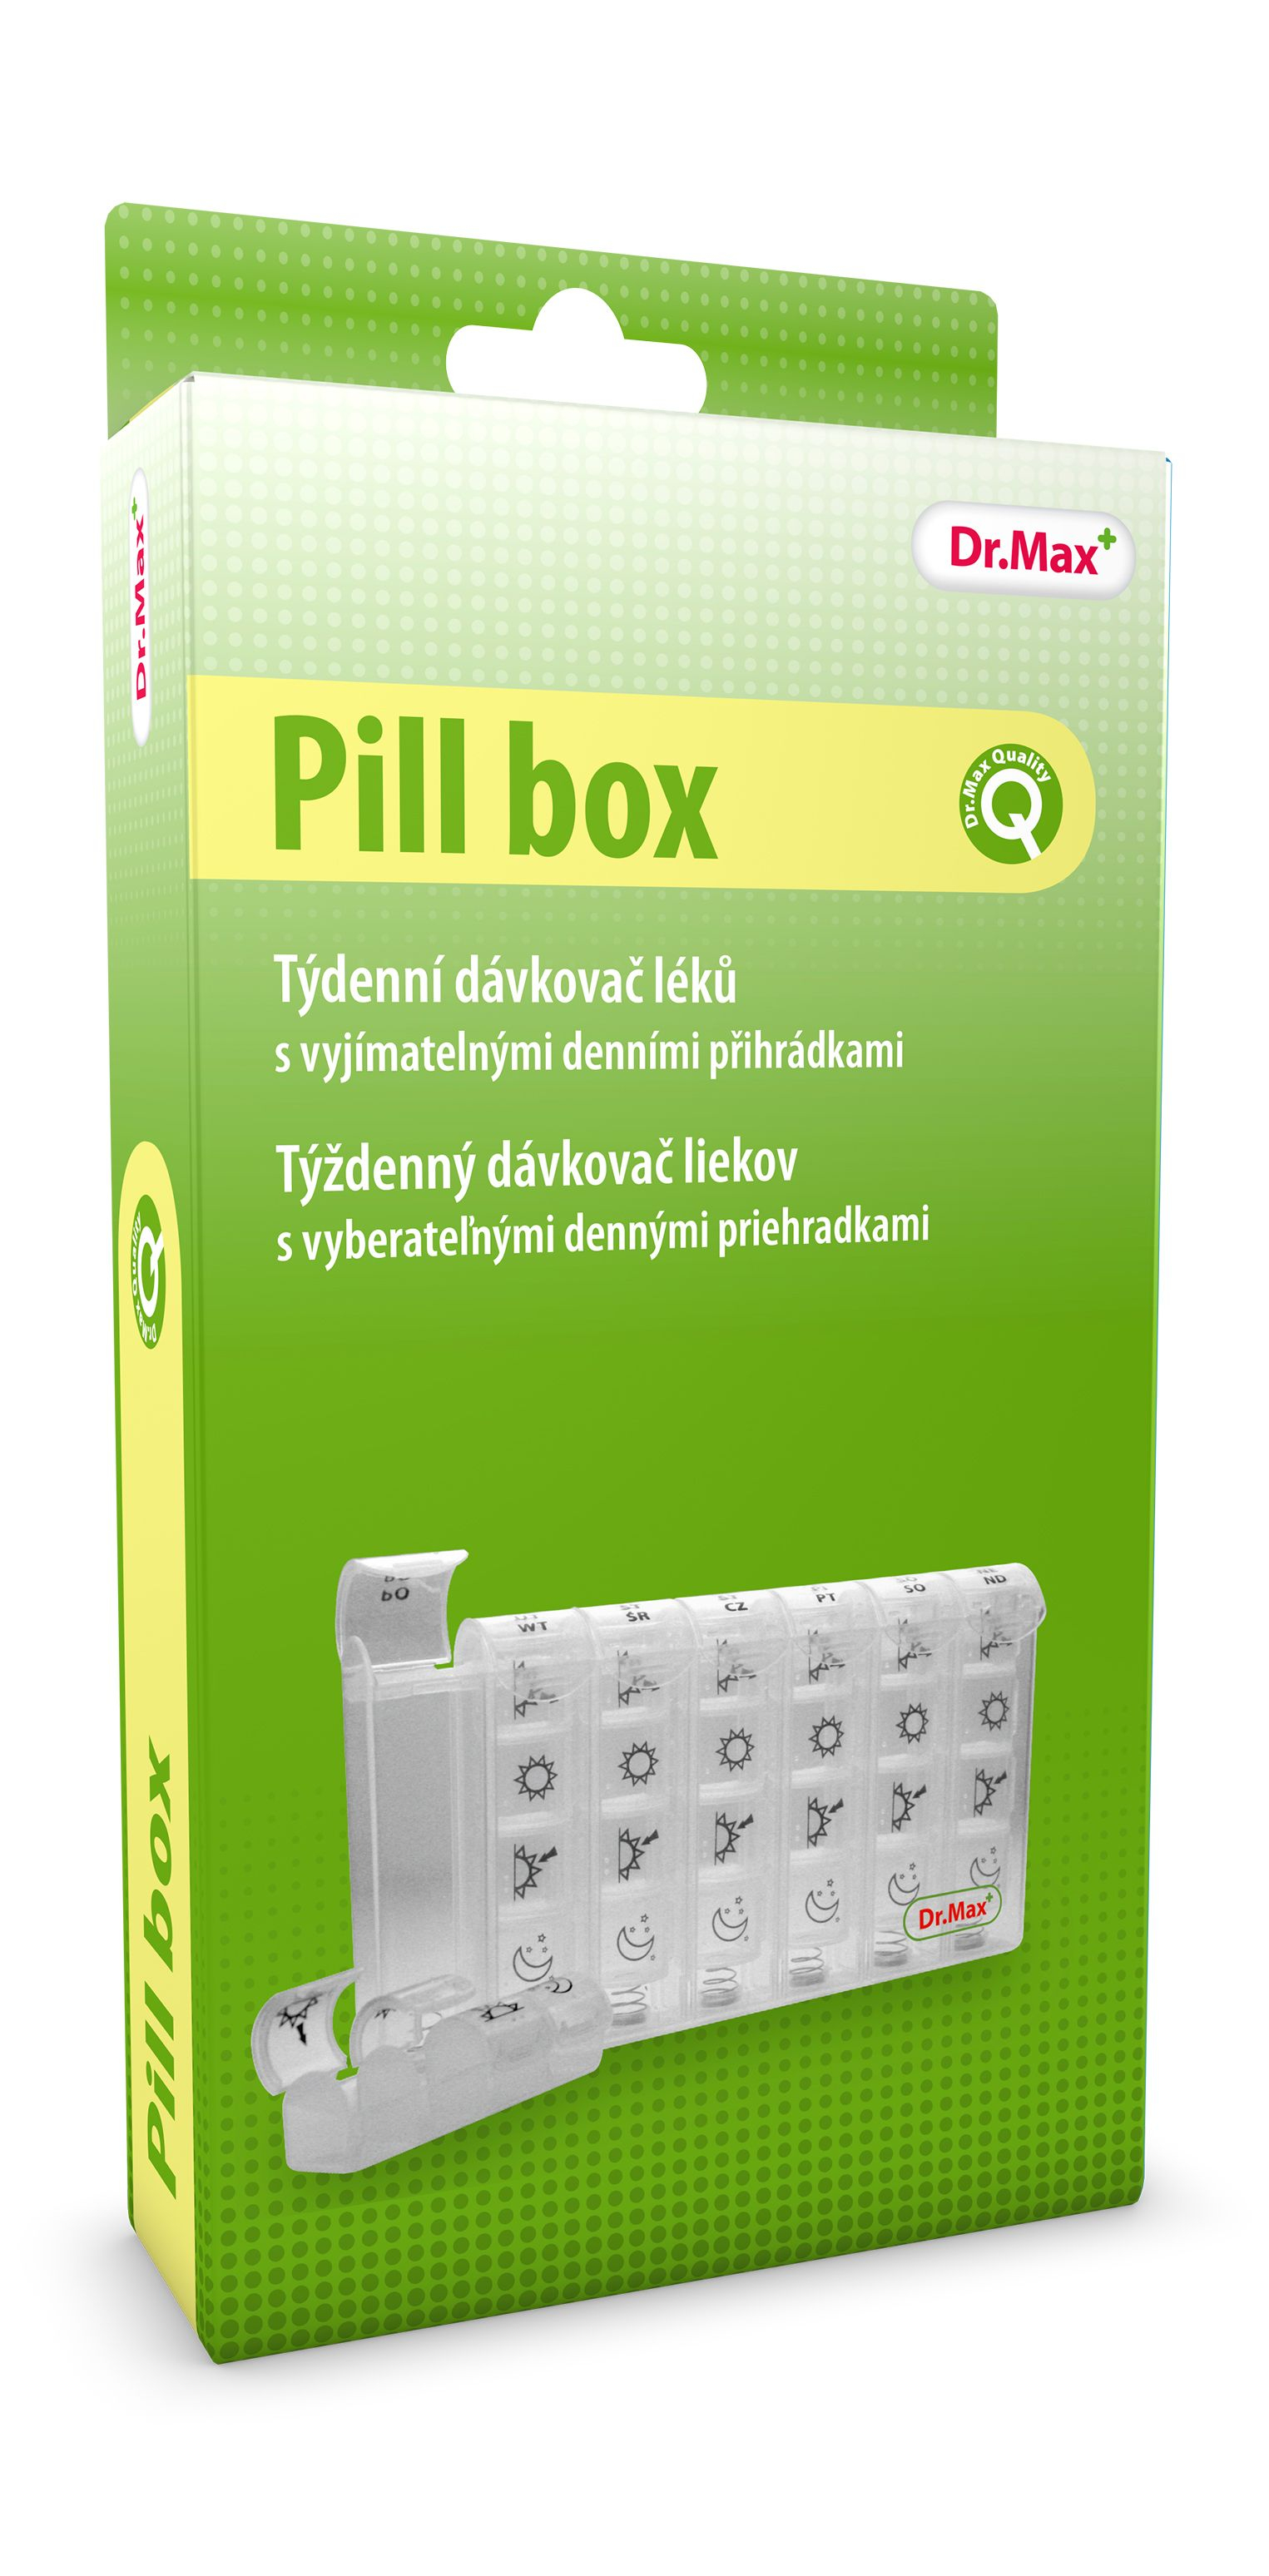 Dr.Max Pill box týdenní dávkovač léků Dr.Max